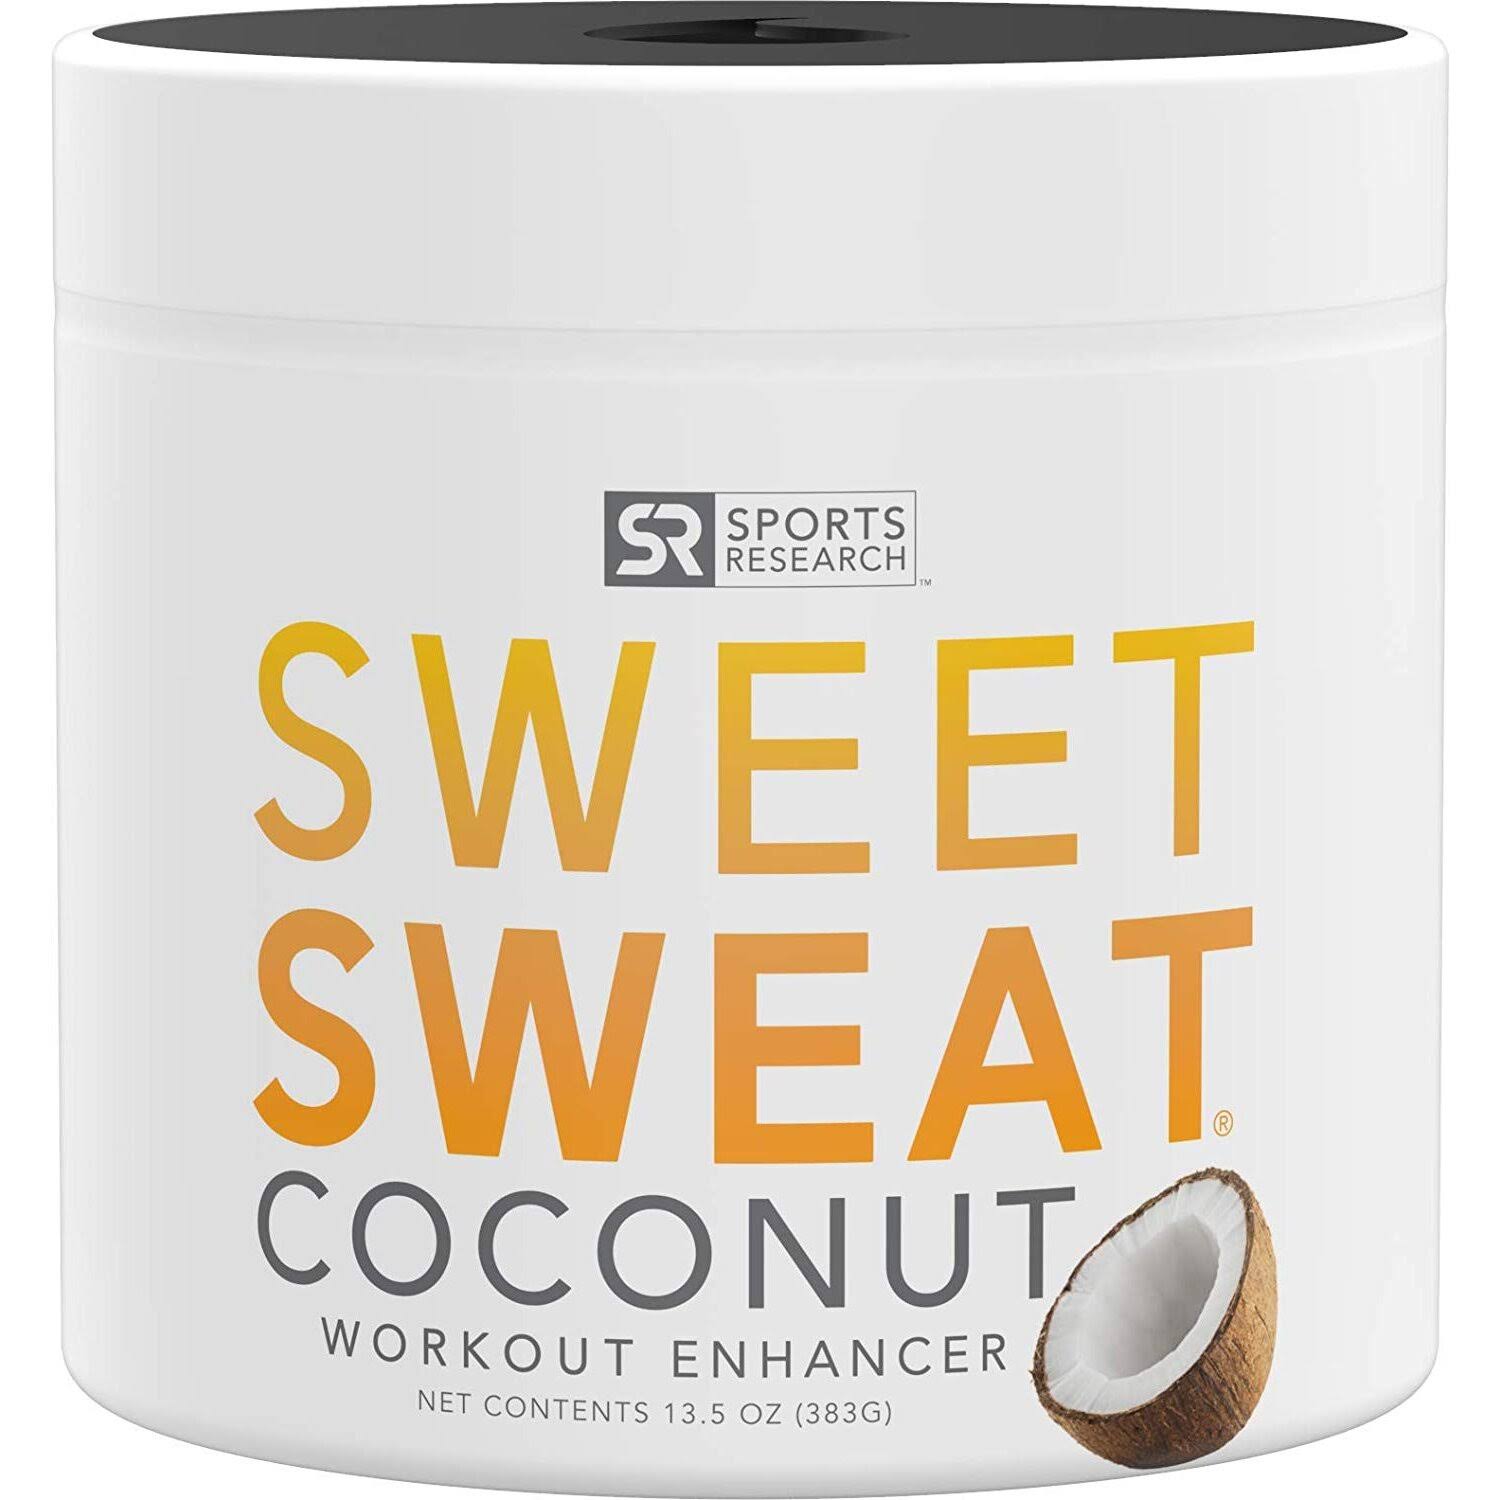 Sweet Sweat Workout Enhancer Gel with Coconut - 13.5oz